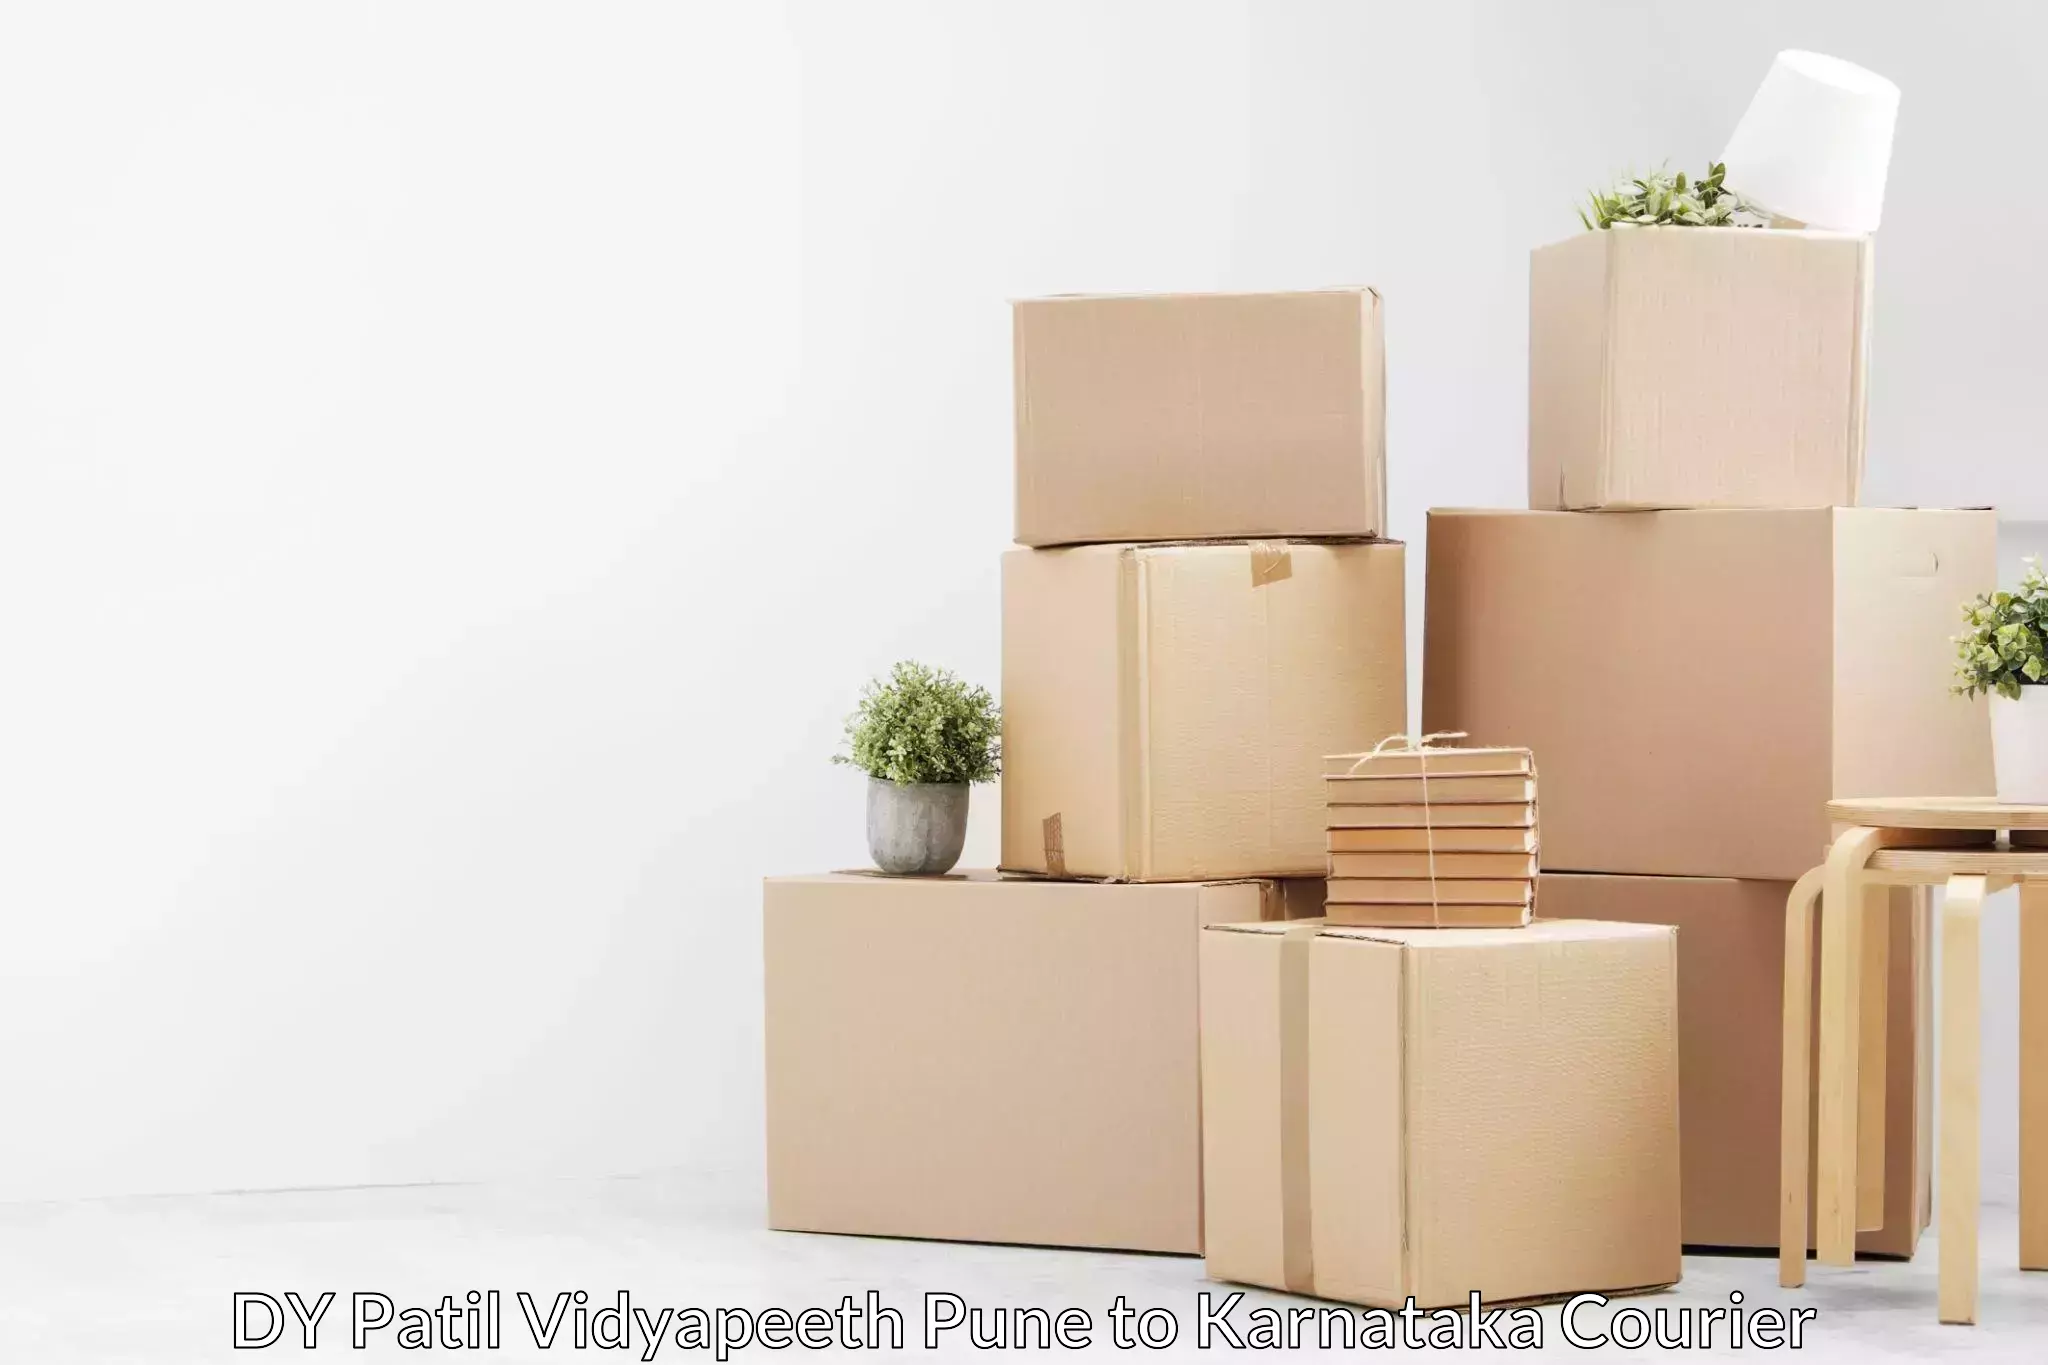 Home goods moving company DY Patil Vidyapeeth Pune to Karnataka